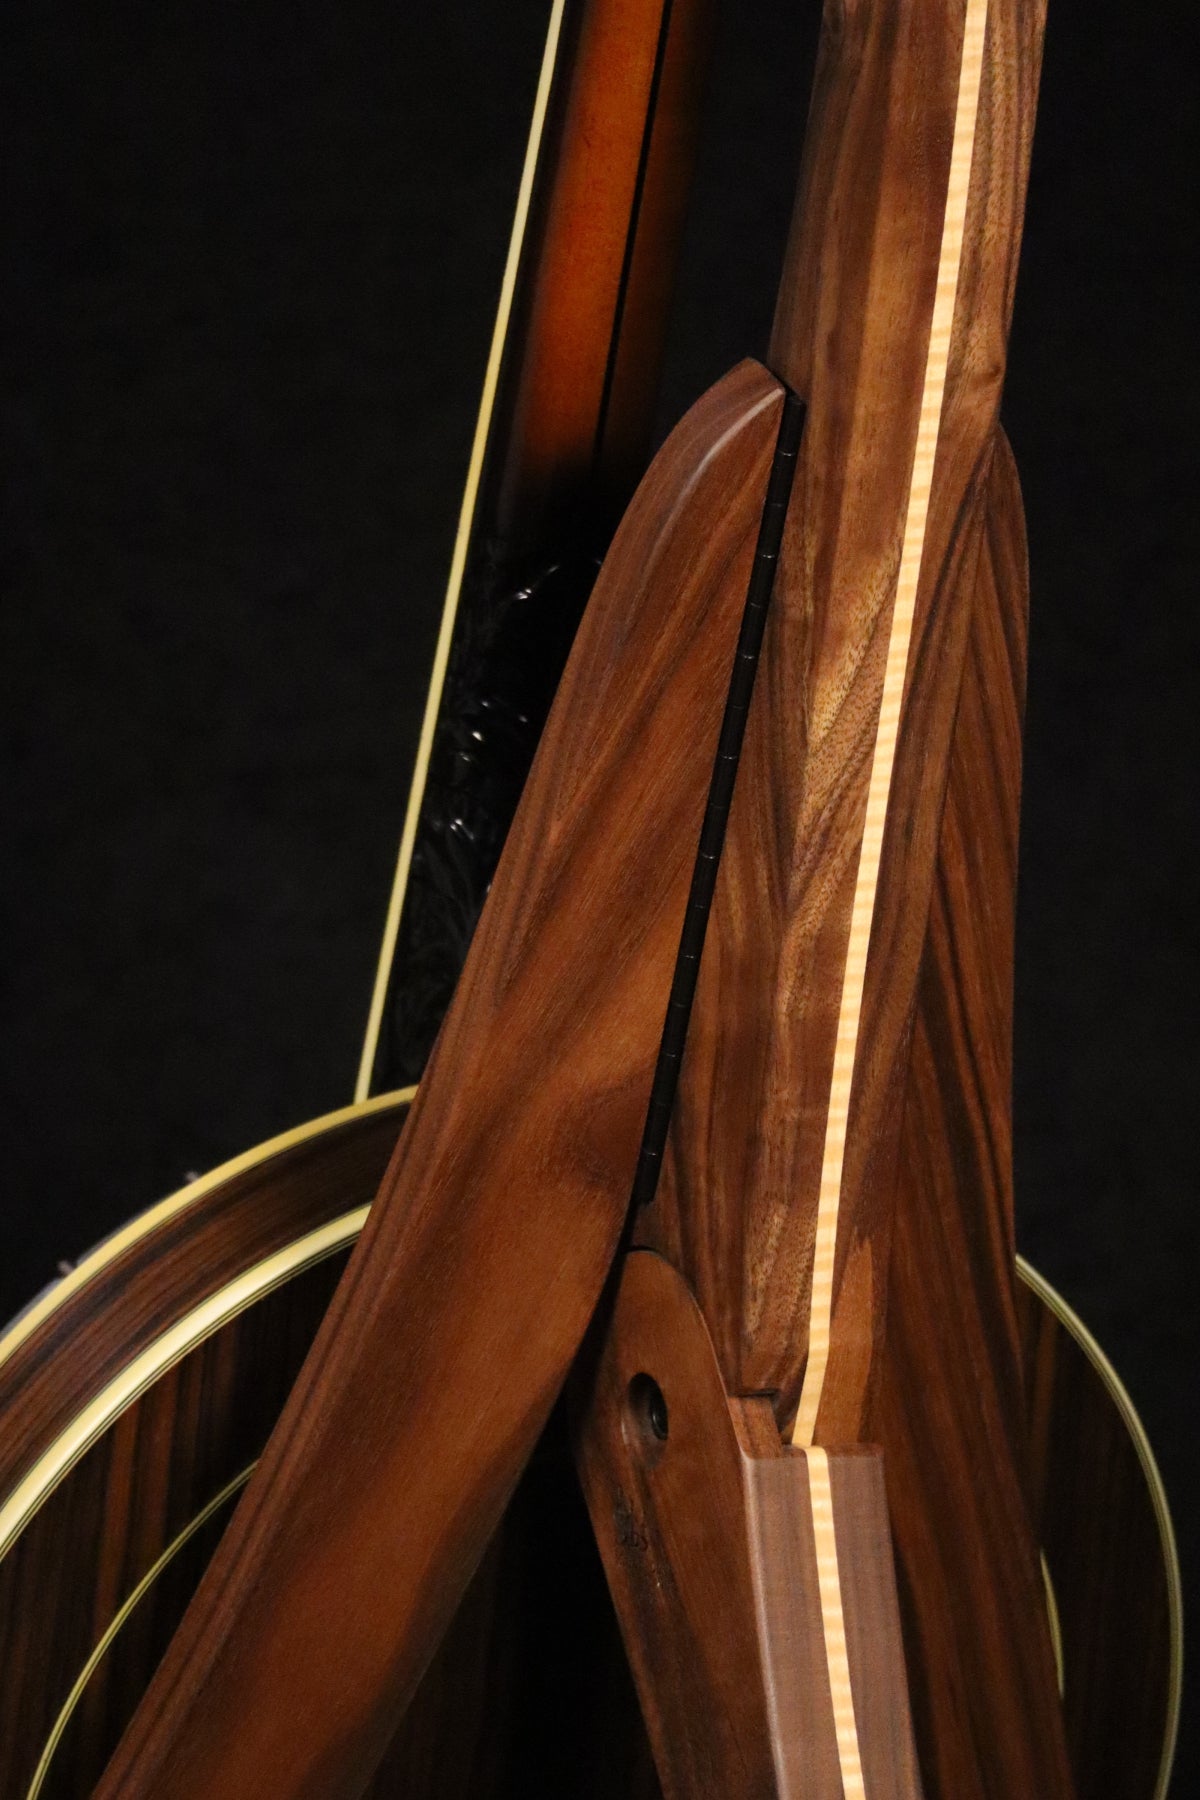 Folding walnut and curly maple wood banjo floor stand closeup rear image with Alvarez banjo